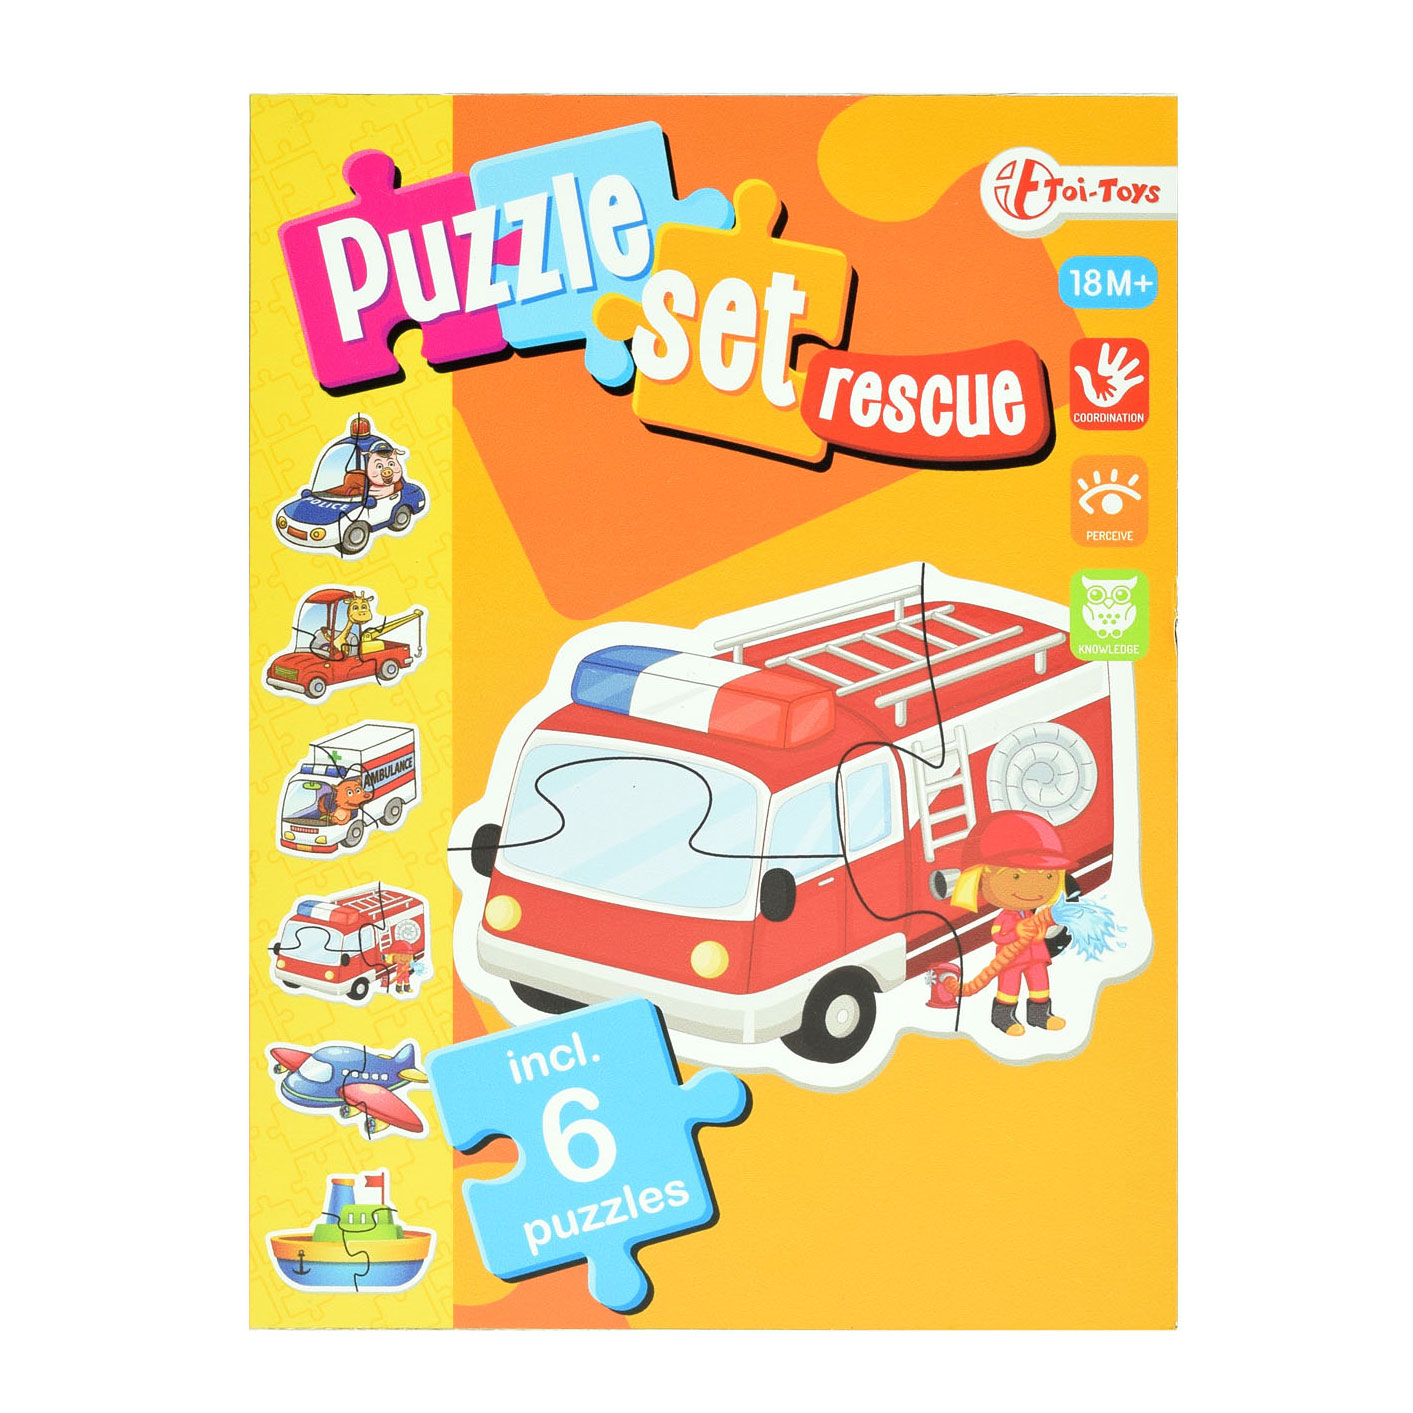 Puzzle-Set Rettungsdienste mit 6 Puzzles